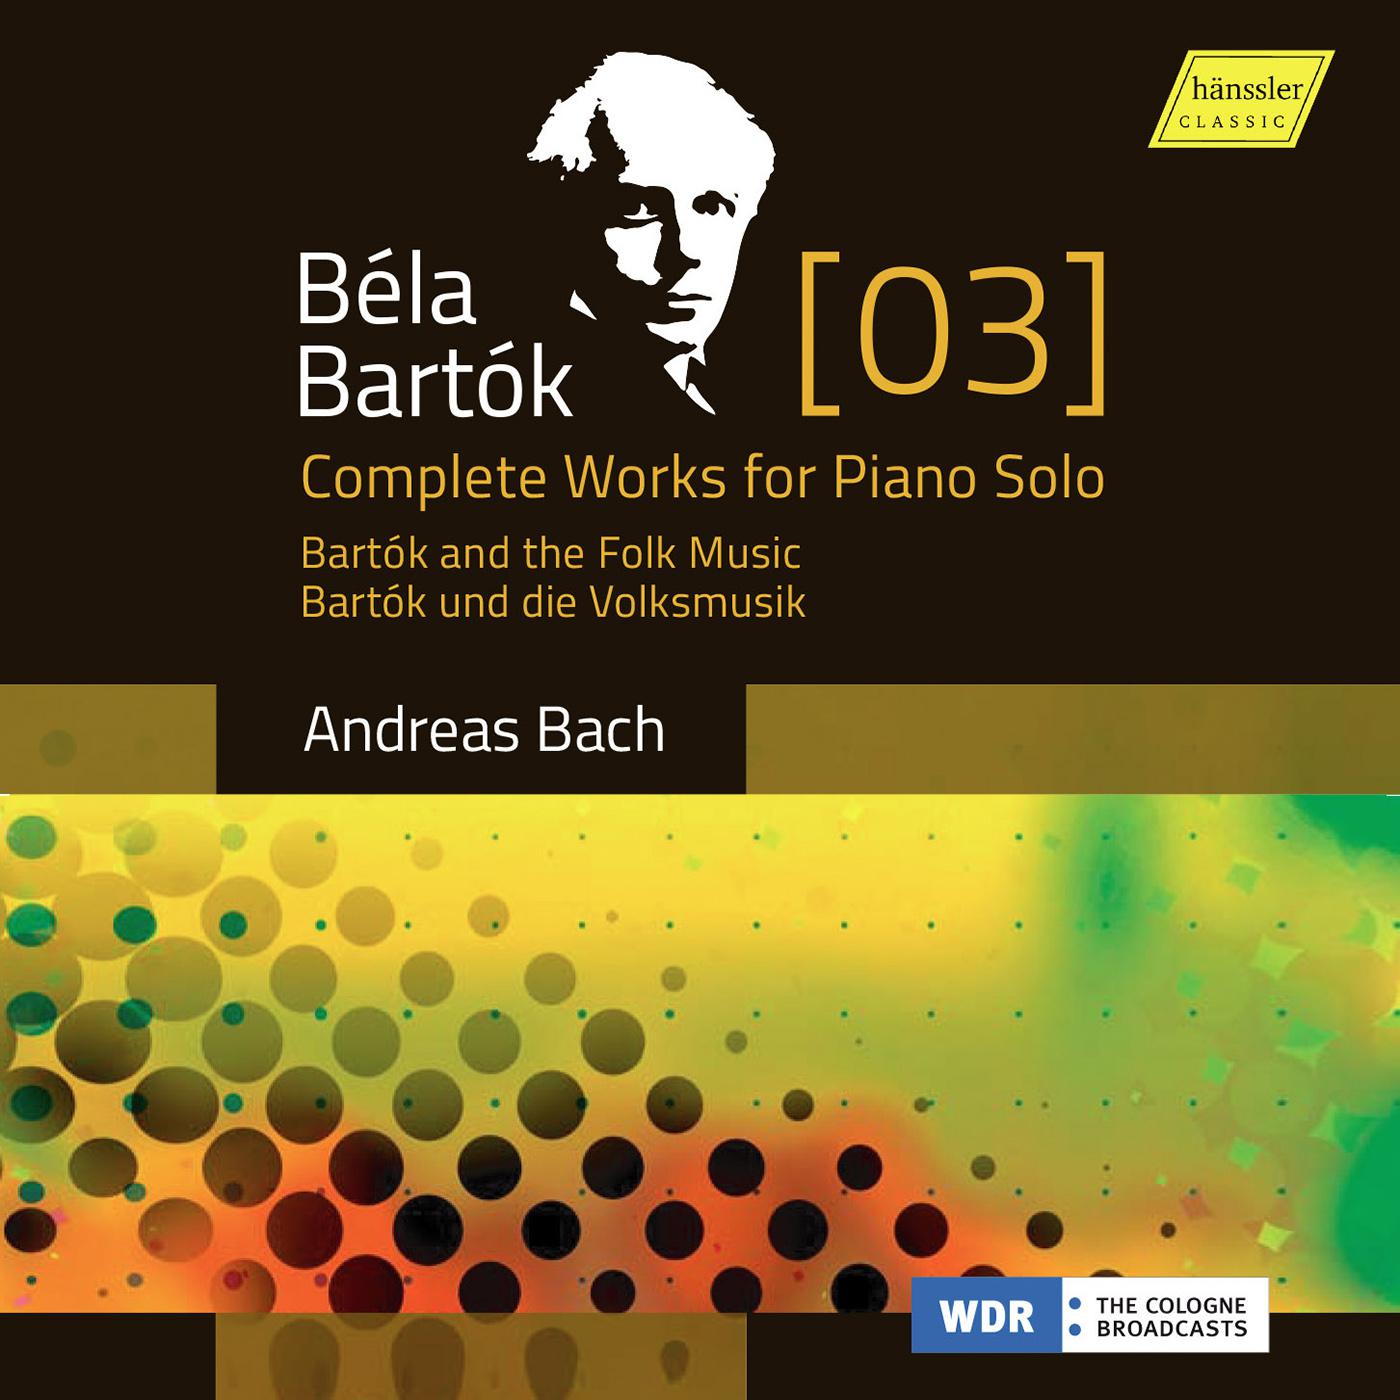 BARTÓ K, B.: Piano Works Complete, Vol. 3  Barto k and the Folk Music A. Bach